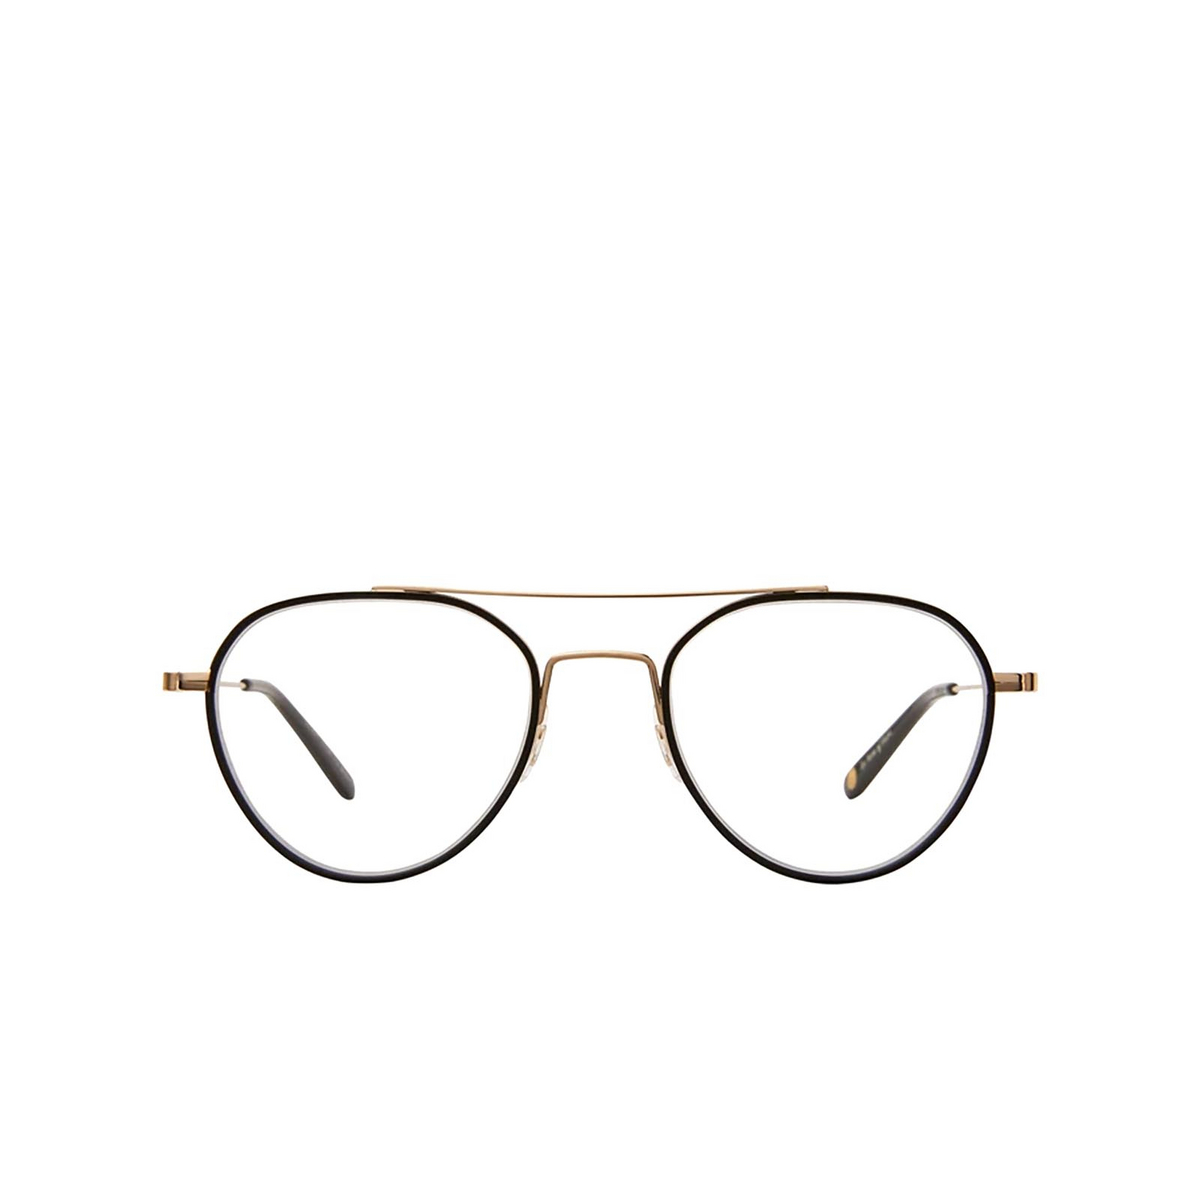 Garrett Leight® Aviator Eyeglasses: San Miguel color Matte Black-gold Mbk-g-bk - front view.